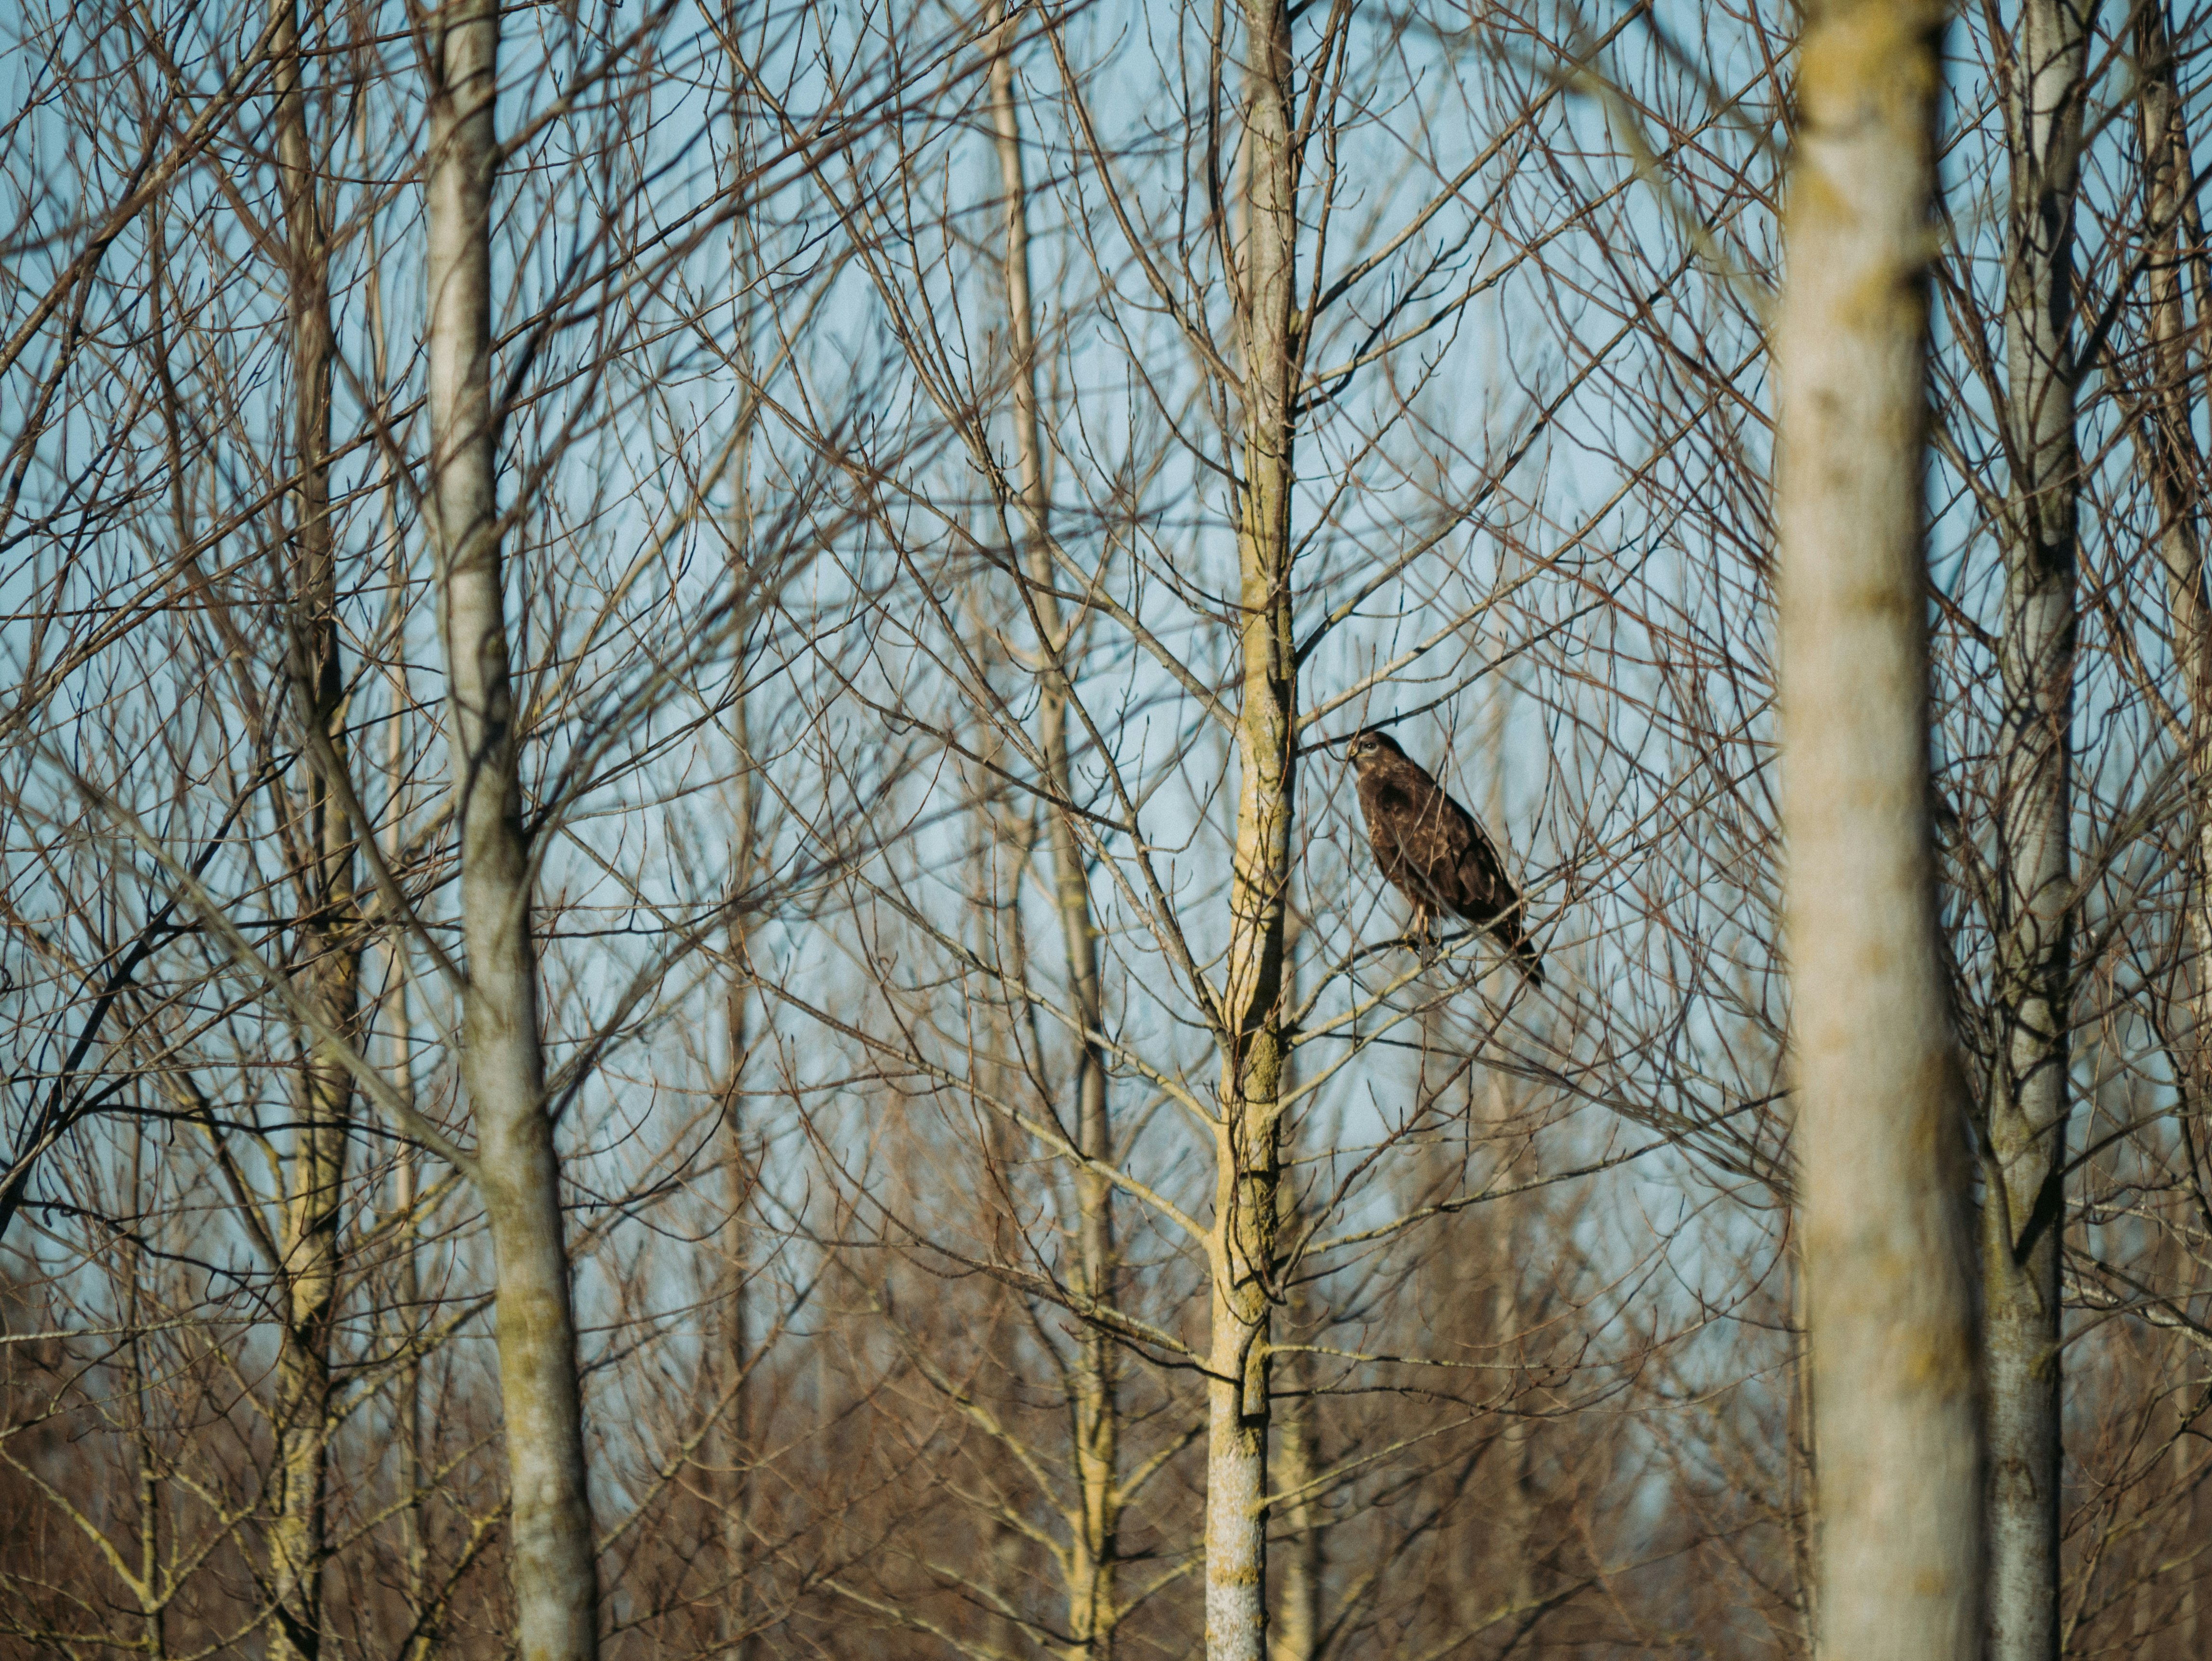 brow bird on tree